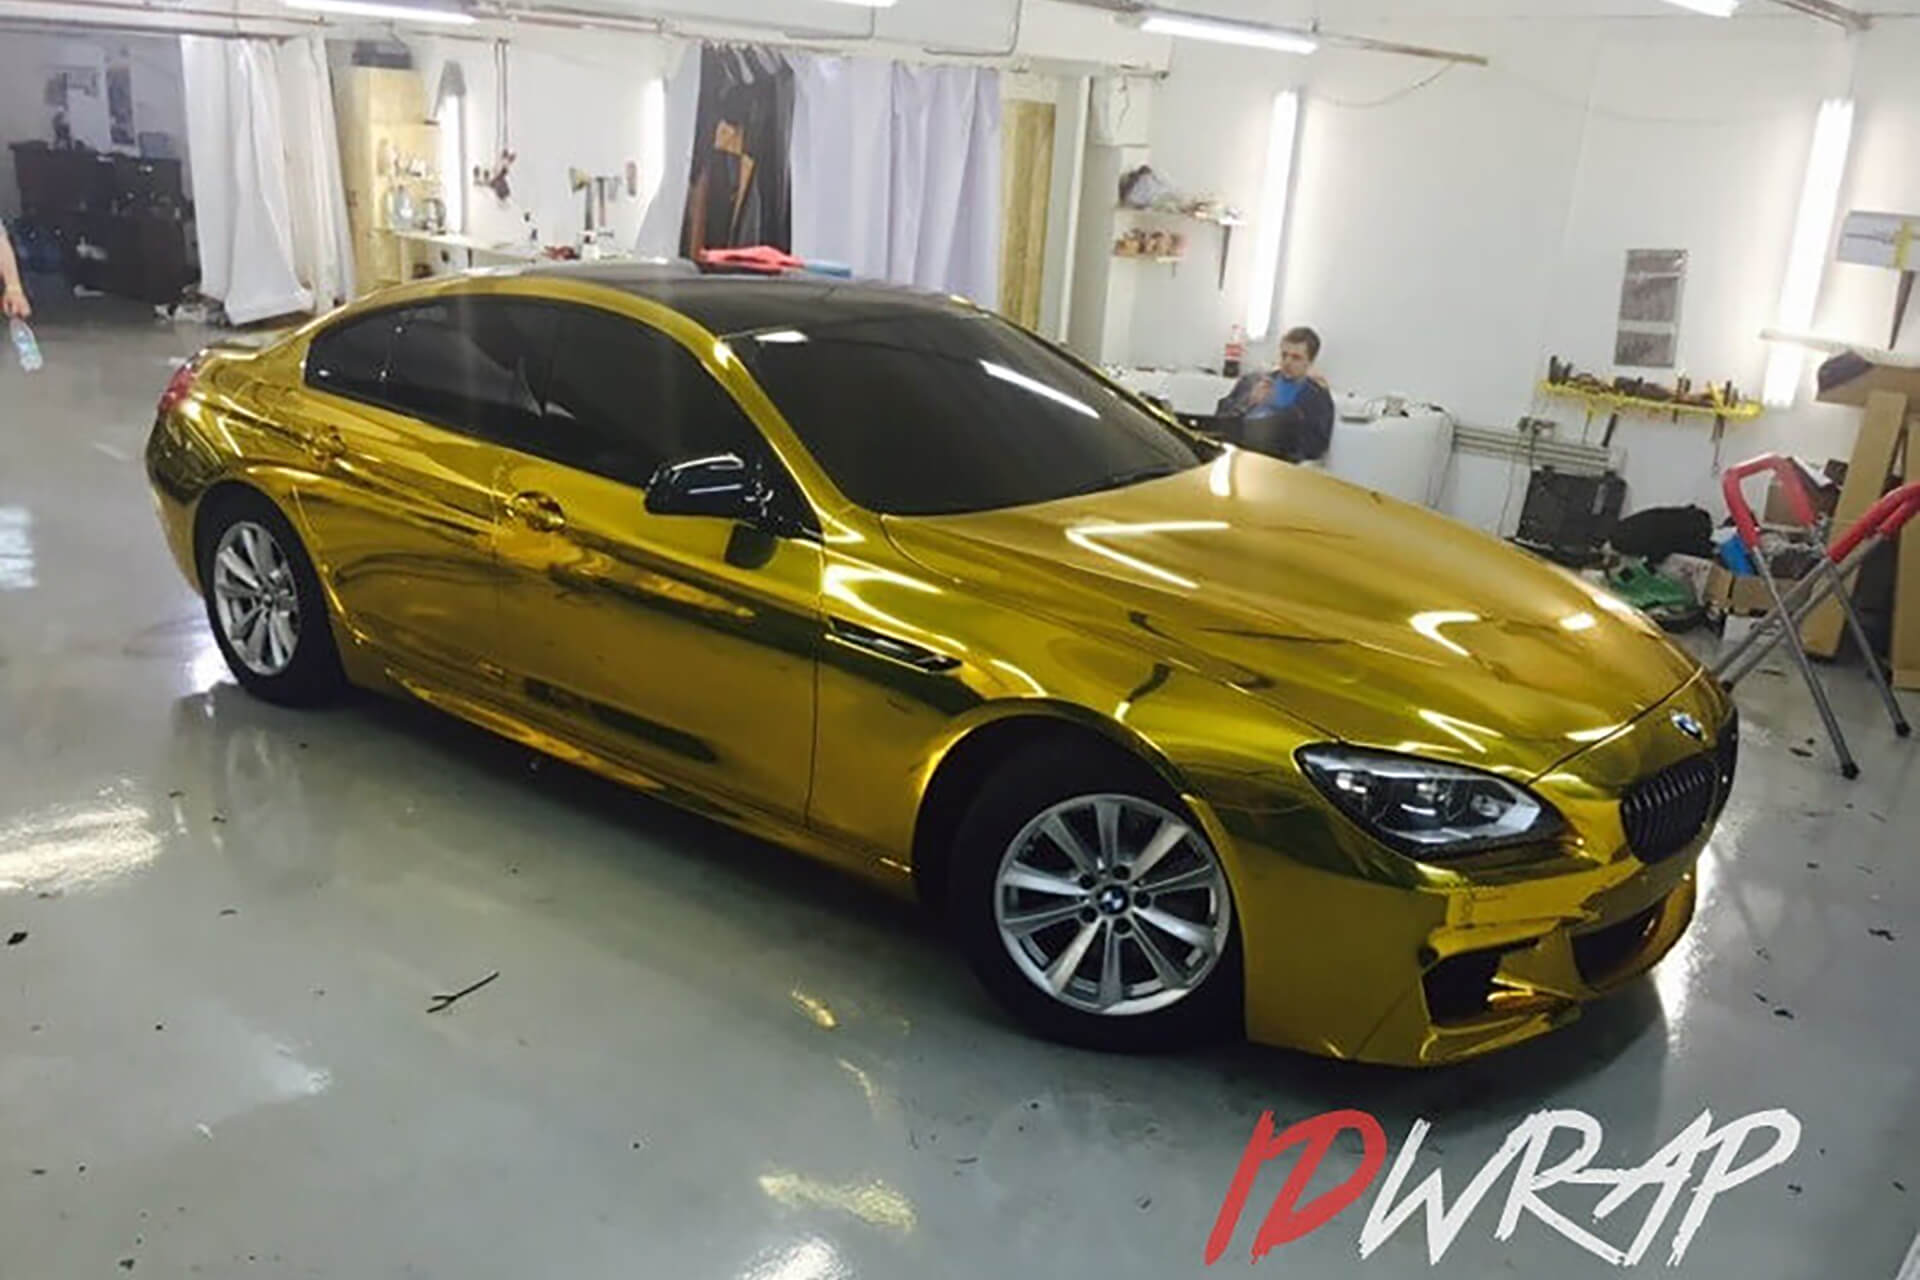 BMW gold